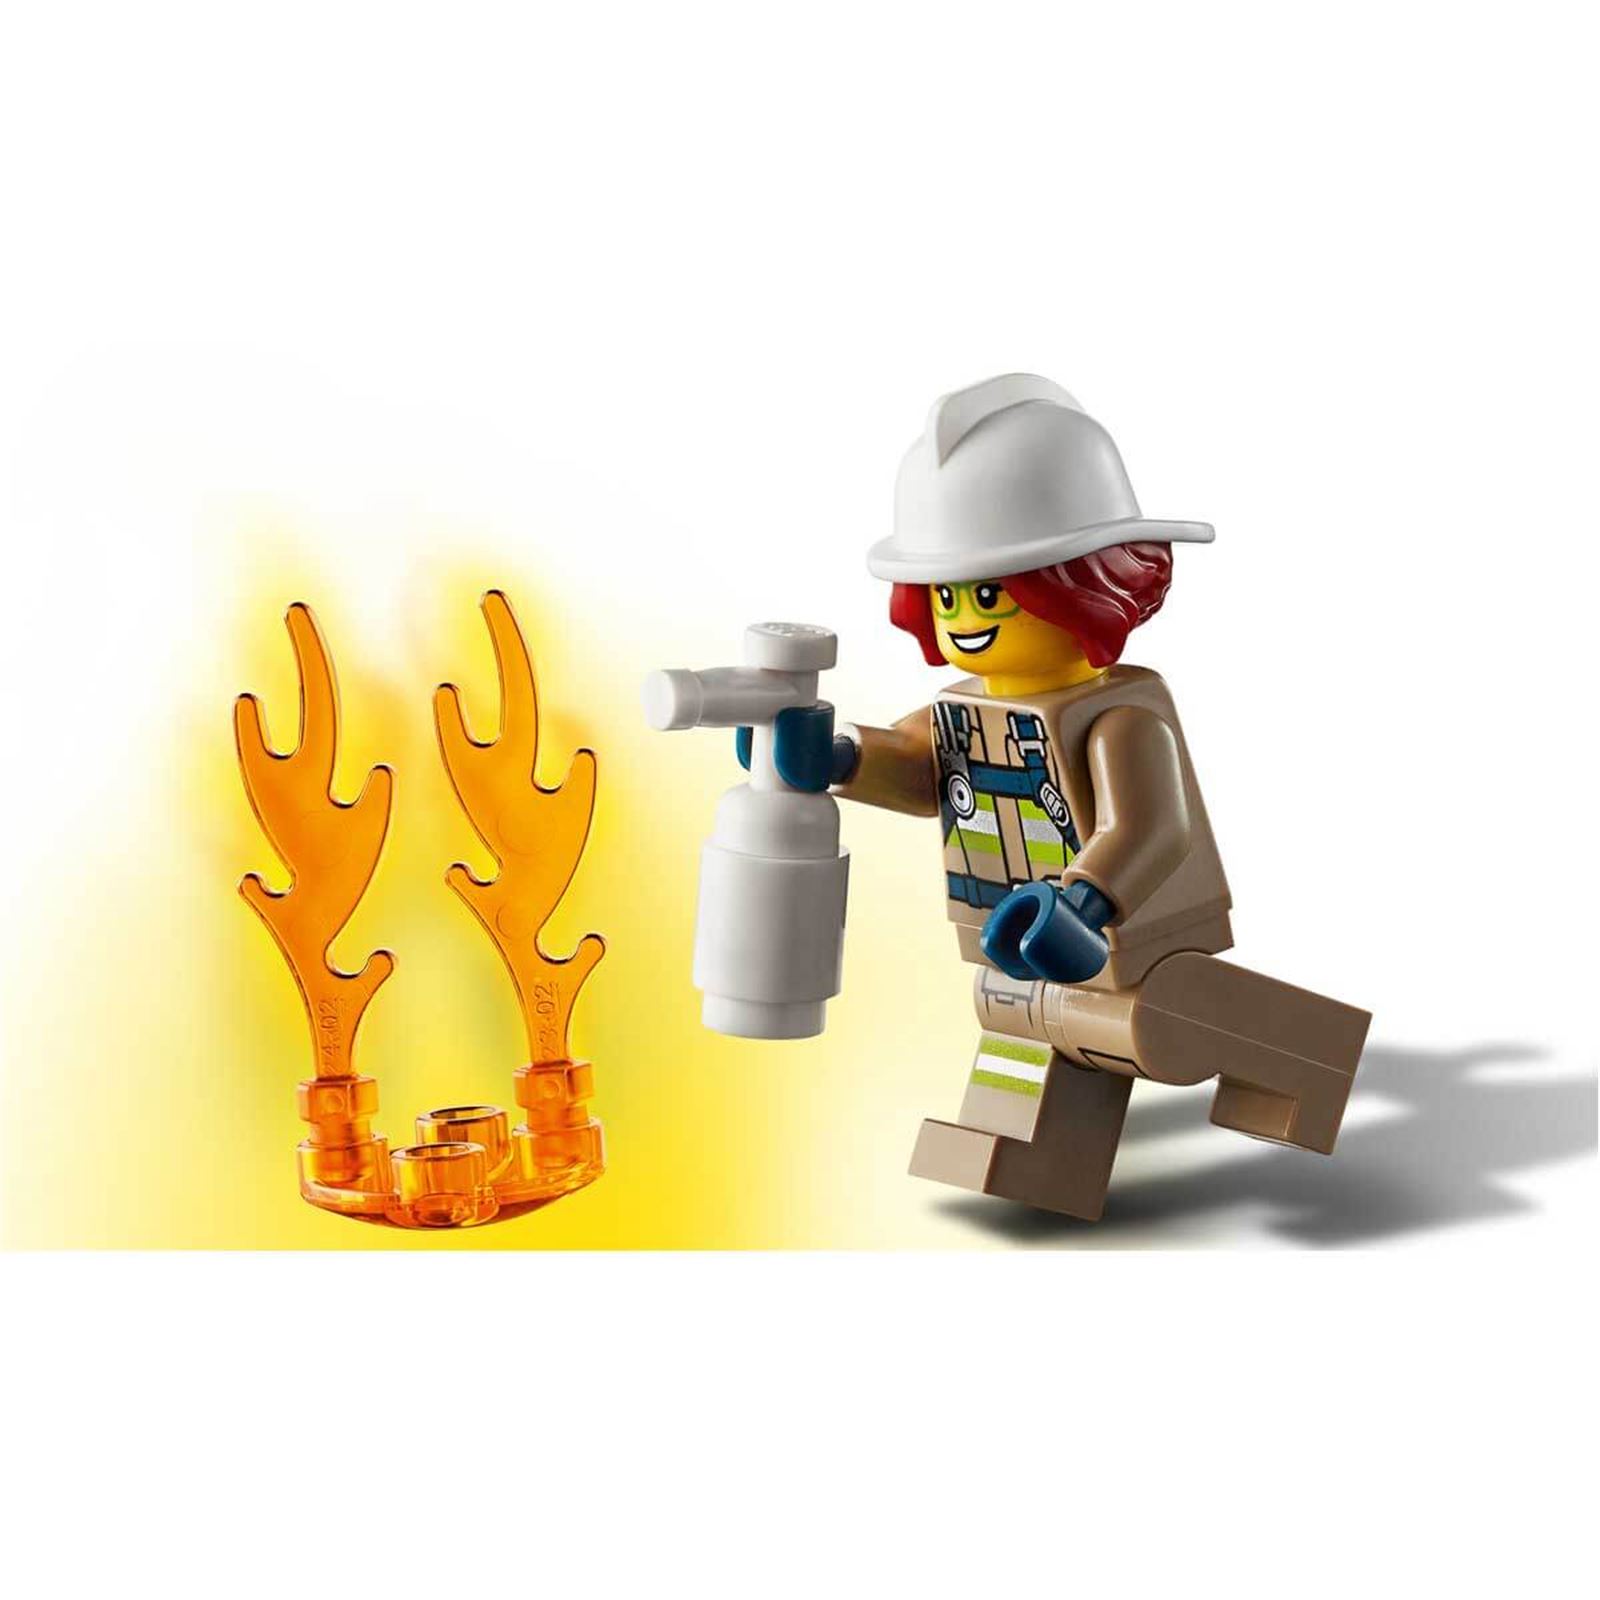 LEGO® City Fire İtfaiye Helikopteri Müdahalesi 60248